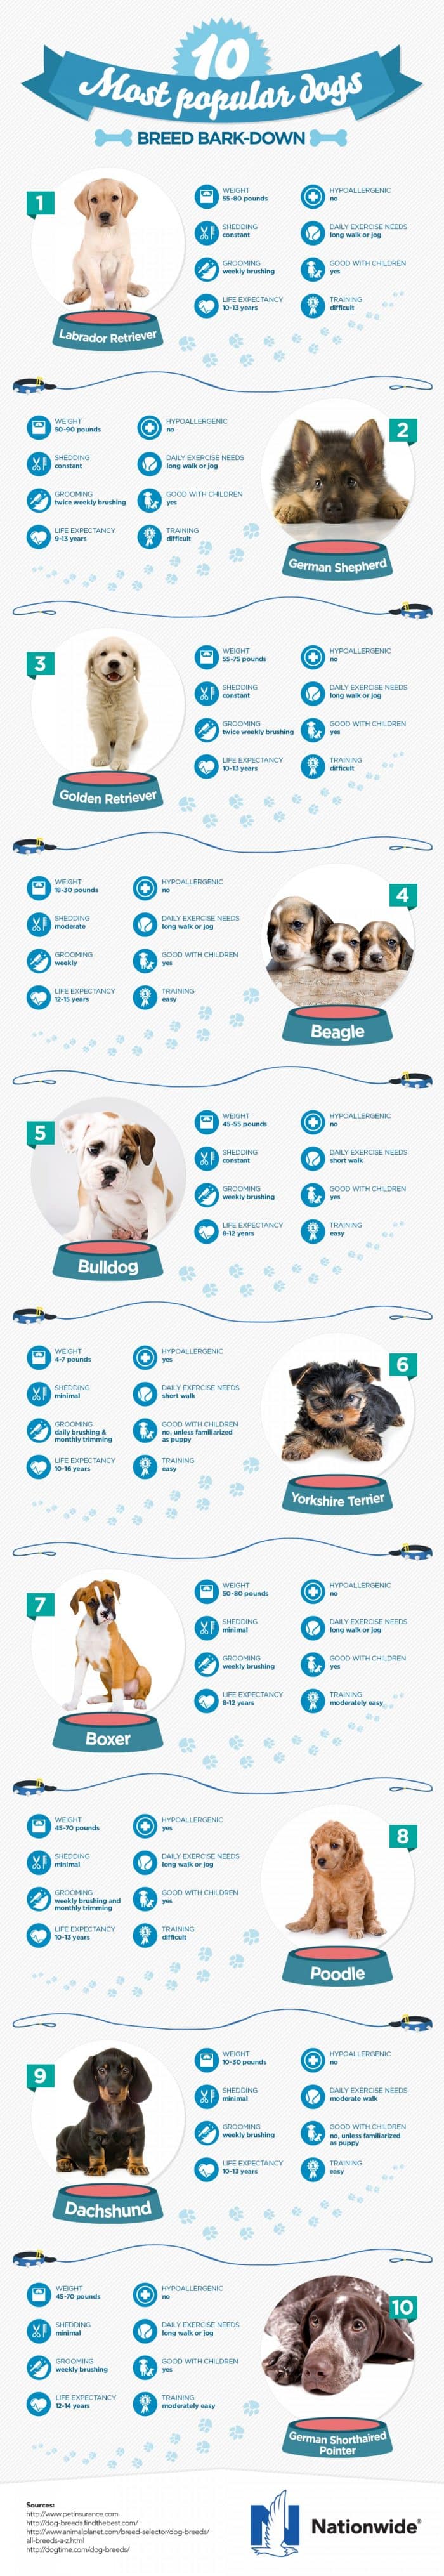 A Breakdown Of The Ten Most Popular Dog Breeds